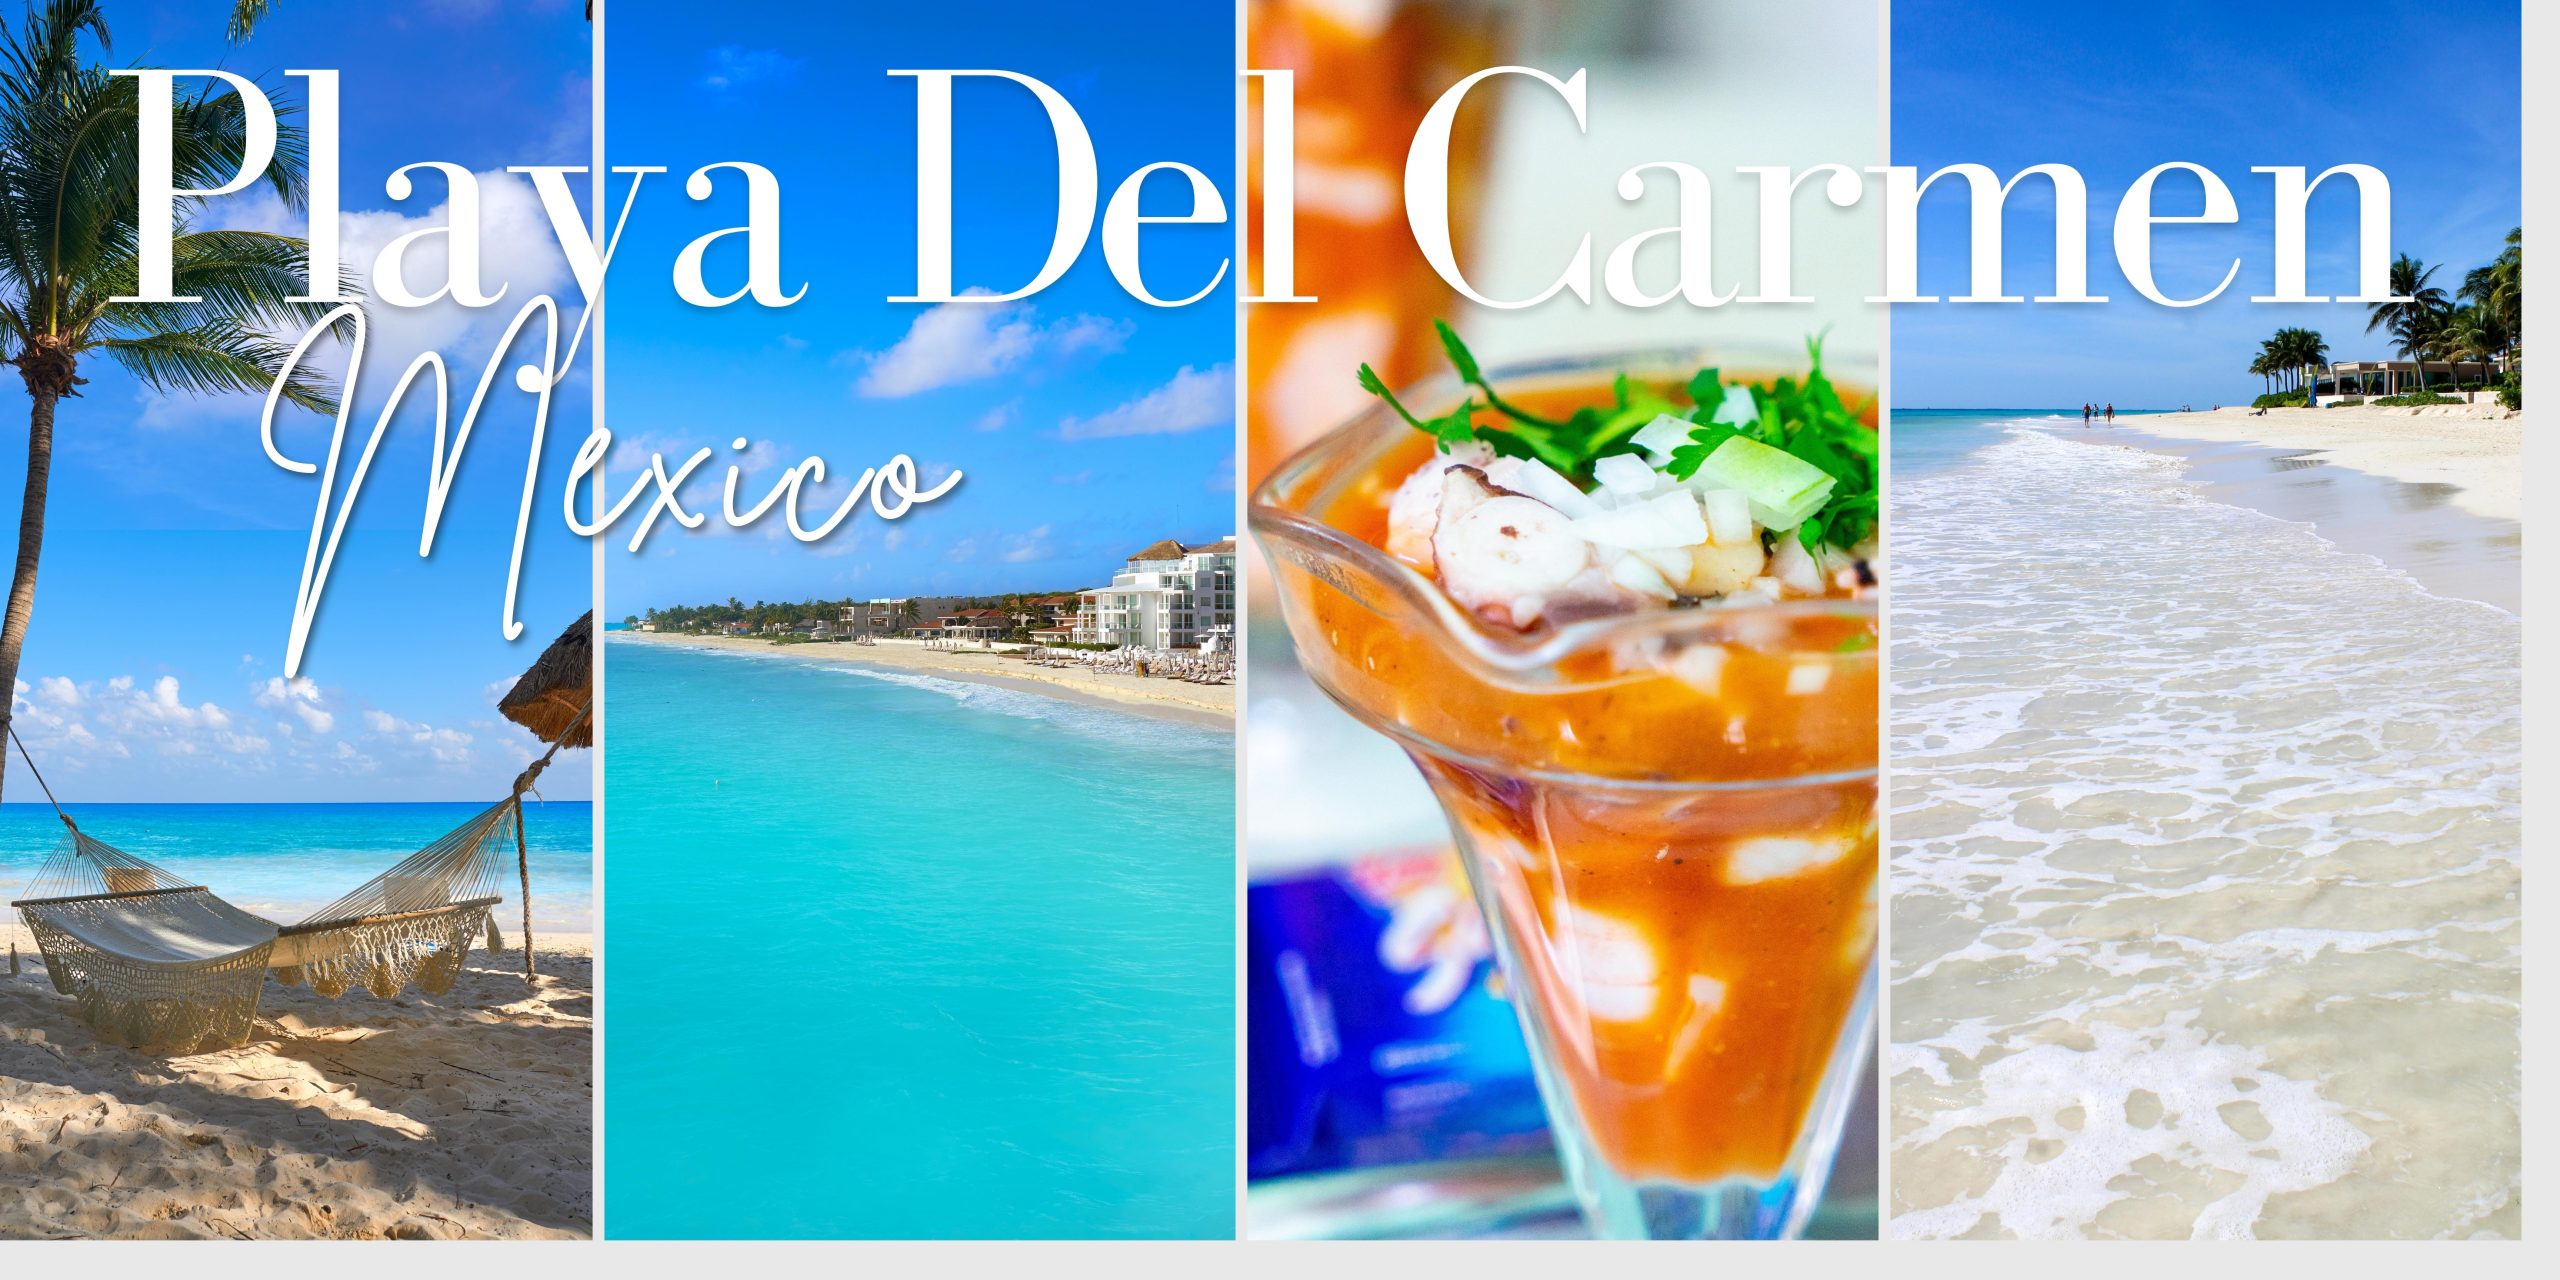 Playa del Carmen vs Cancun